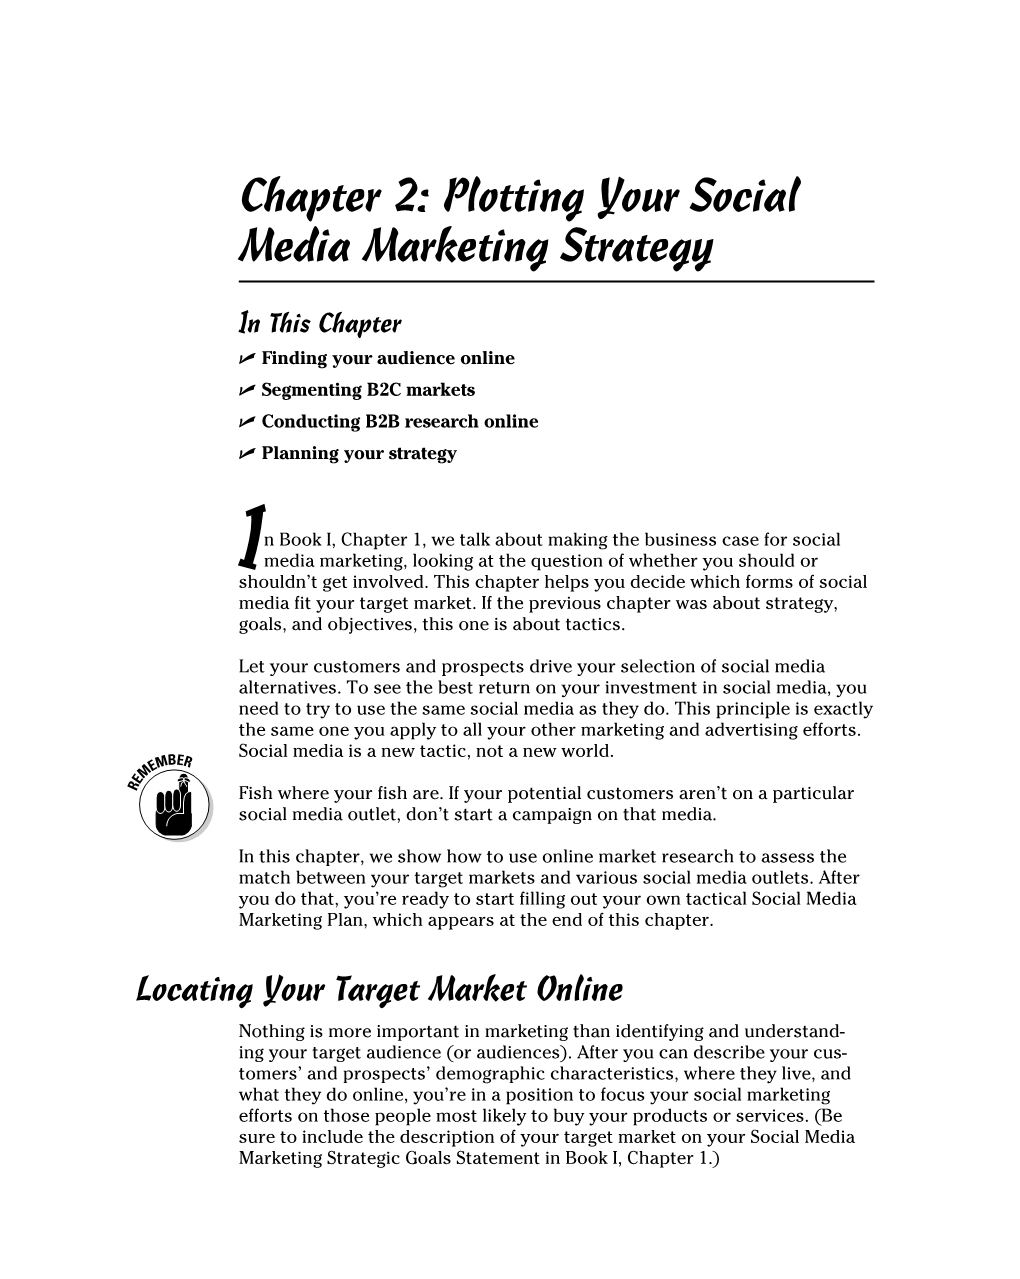 Chapter 2: Plotting Your Social Media Marketing Strategy